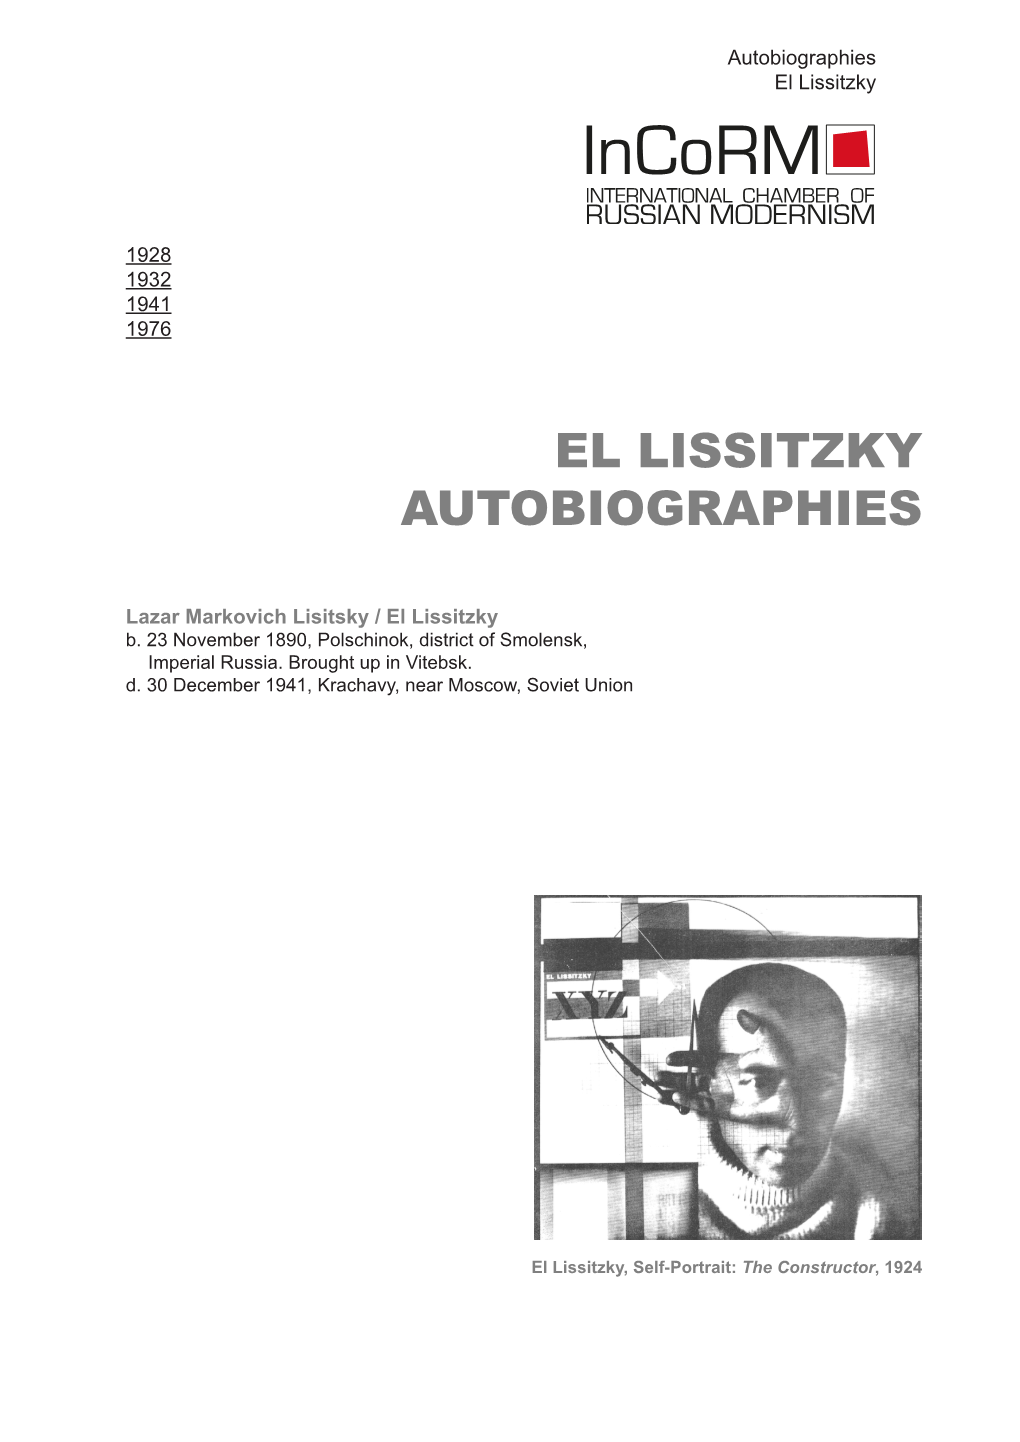 El Lissitzky Autobiographies